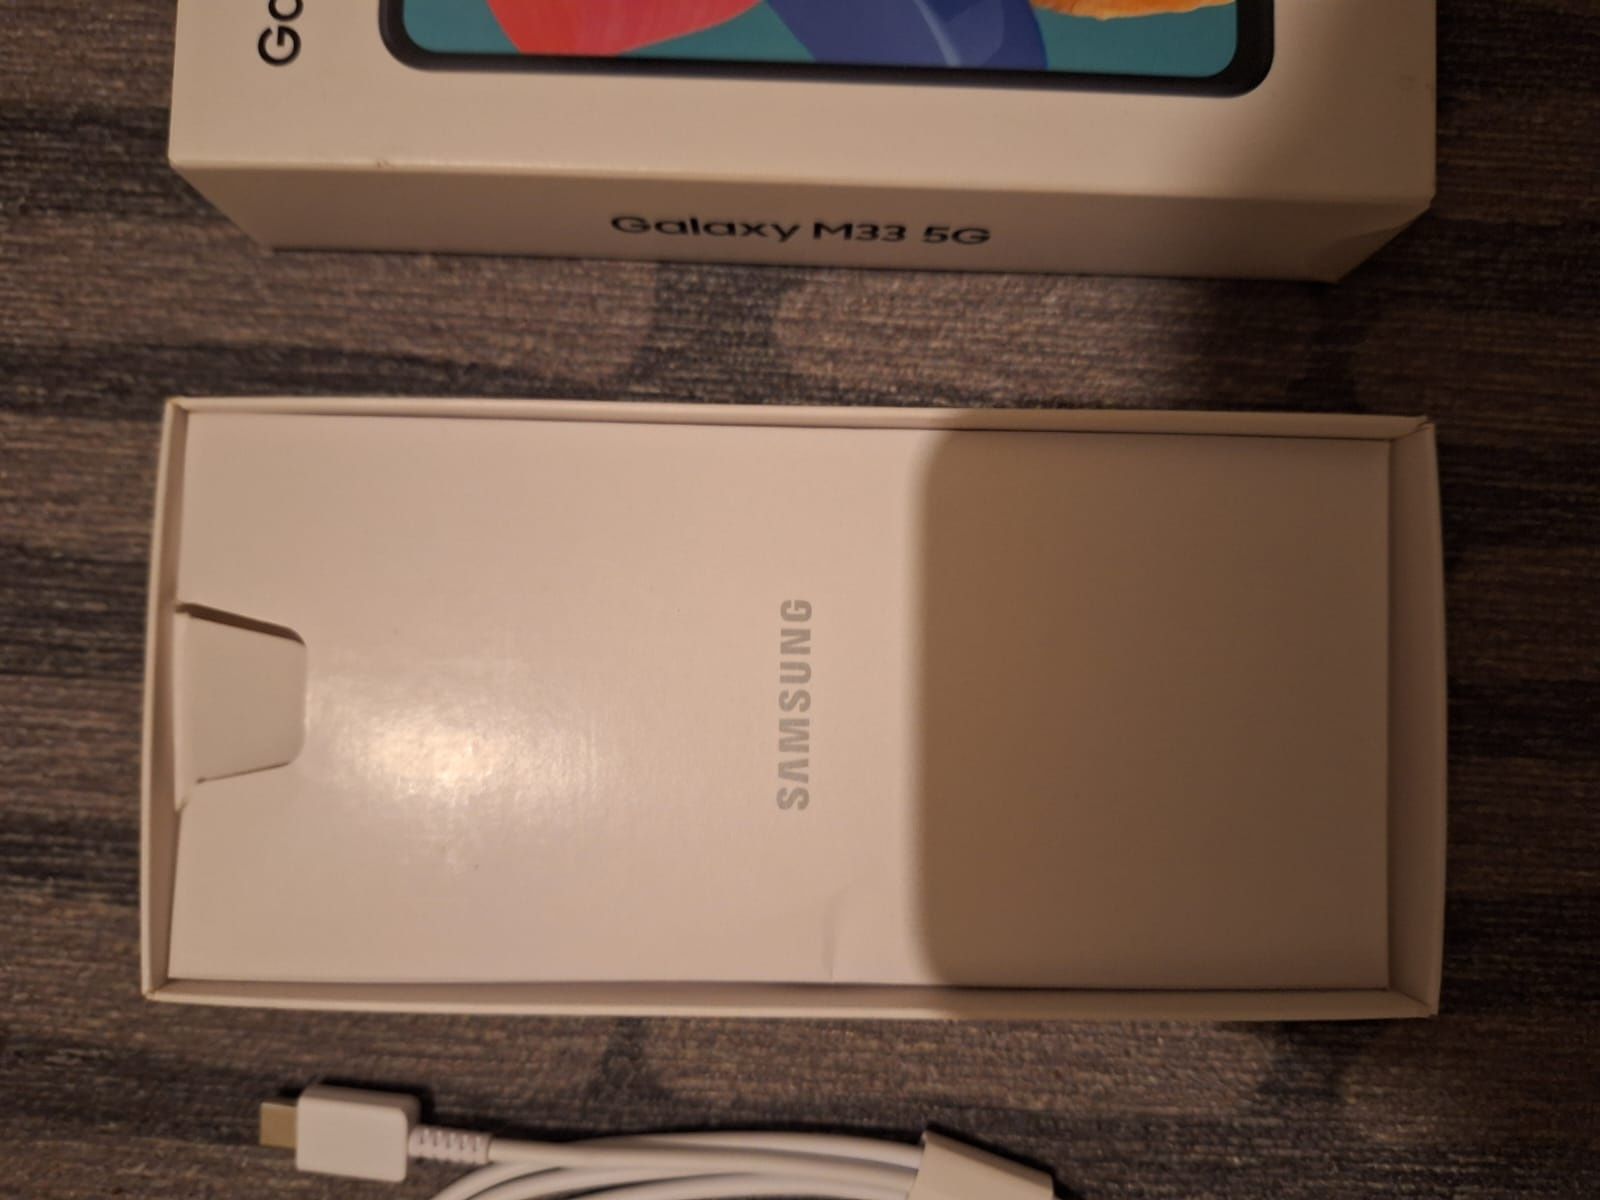 Samsung Galaxy m33 5g 128gb